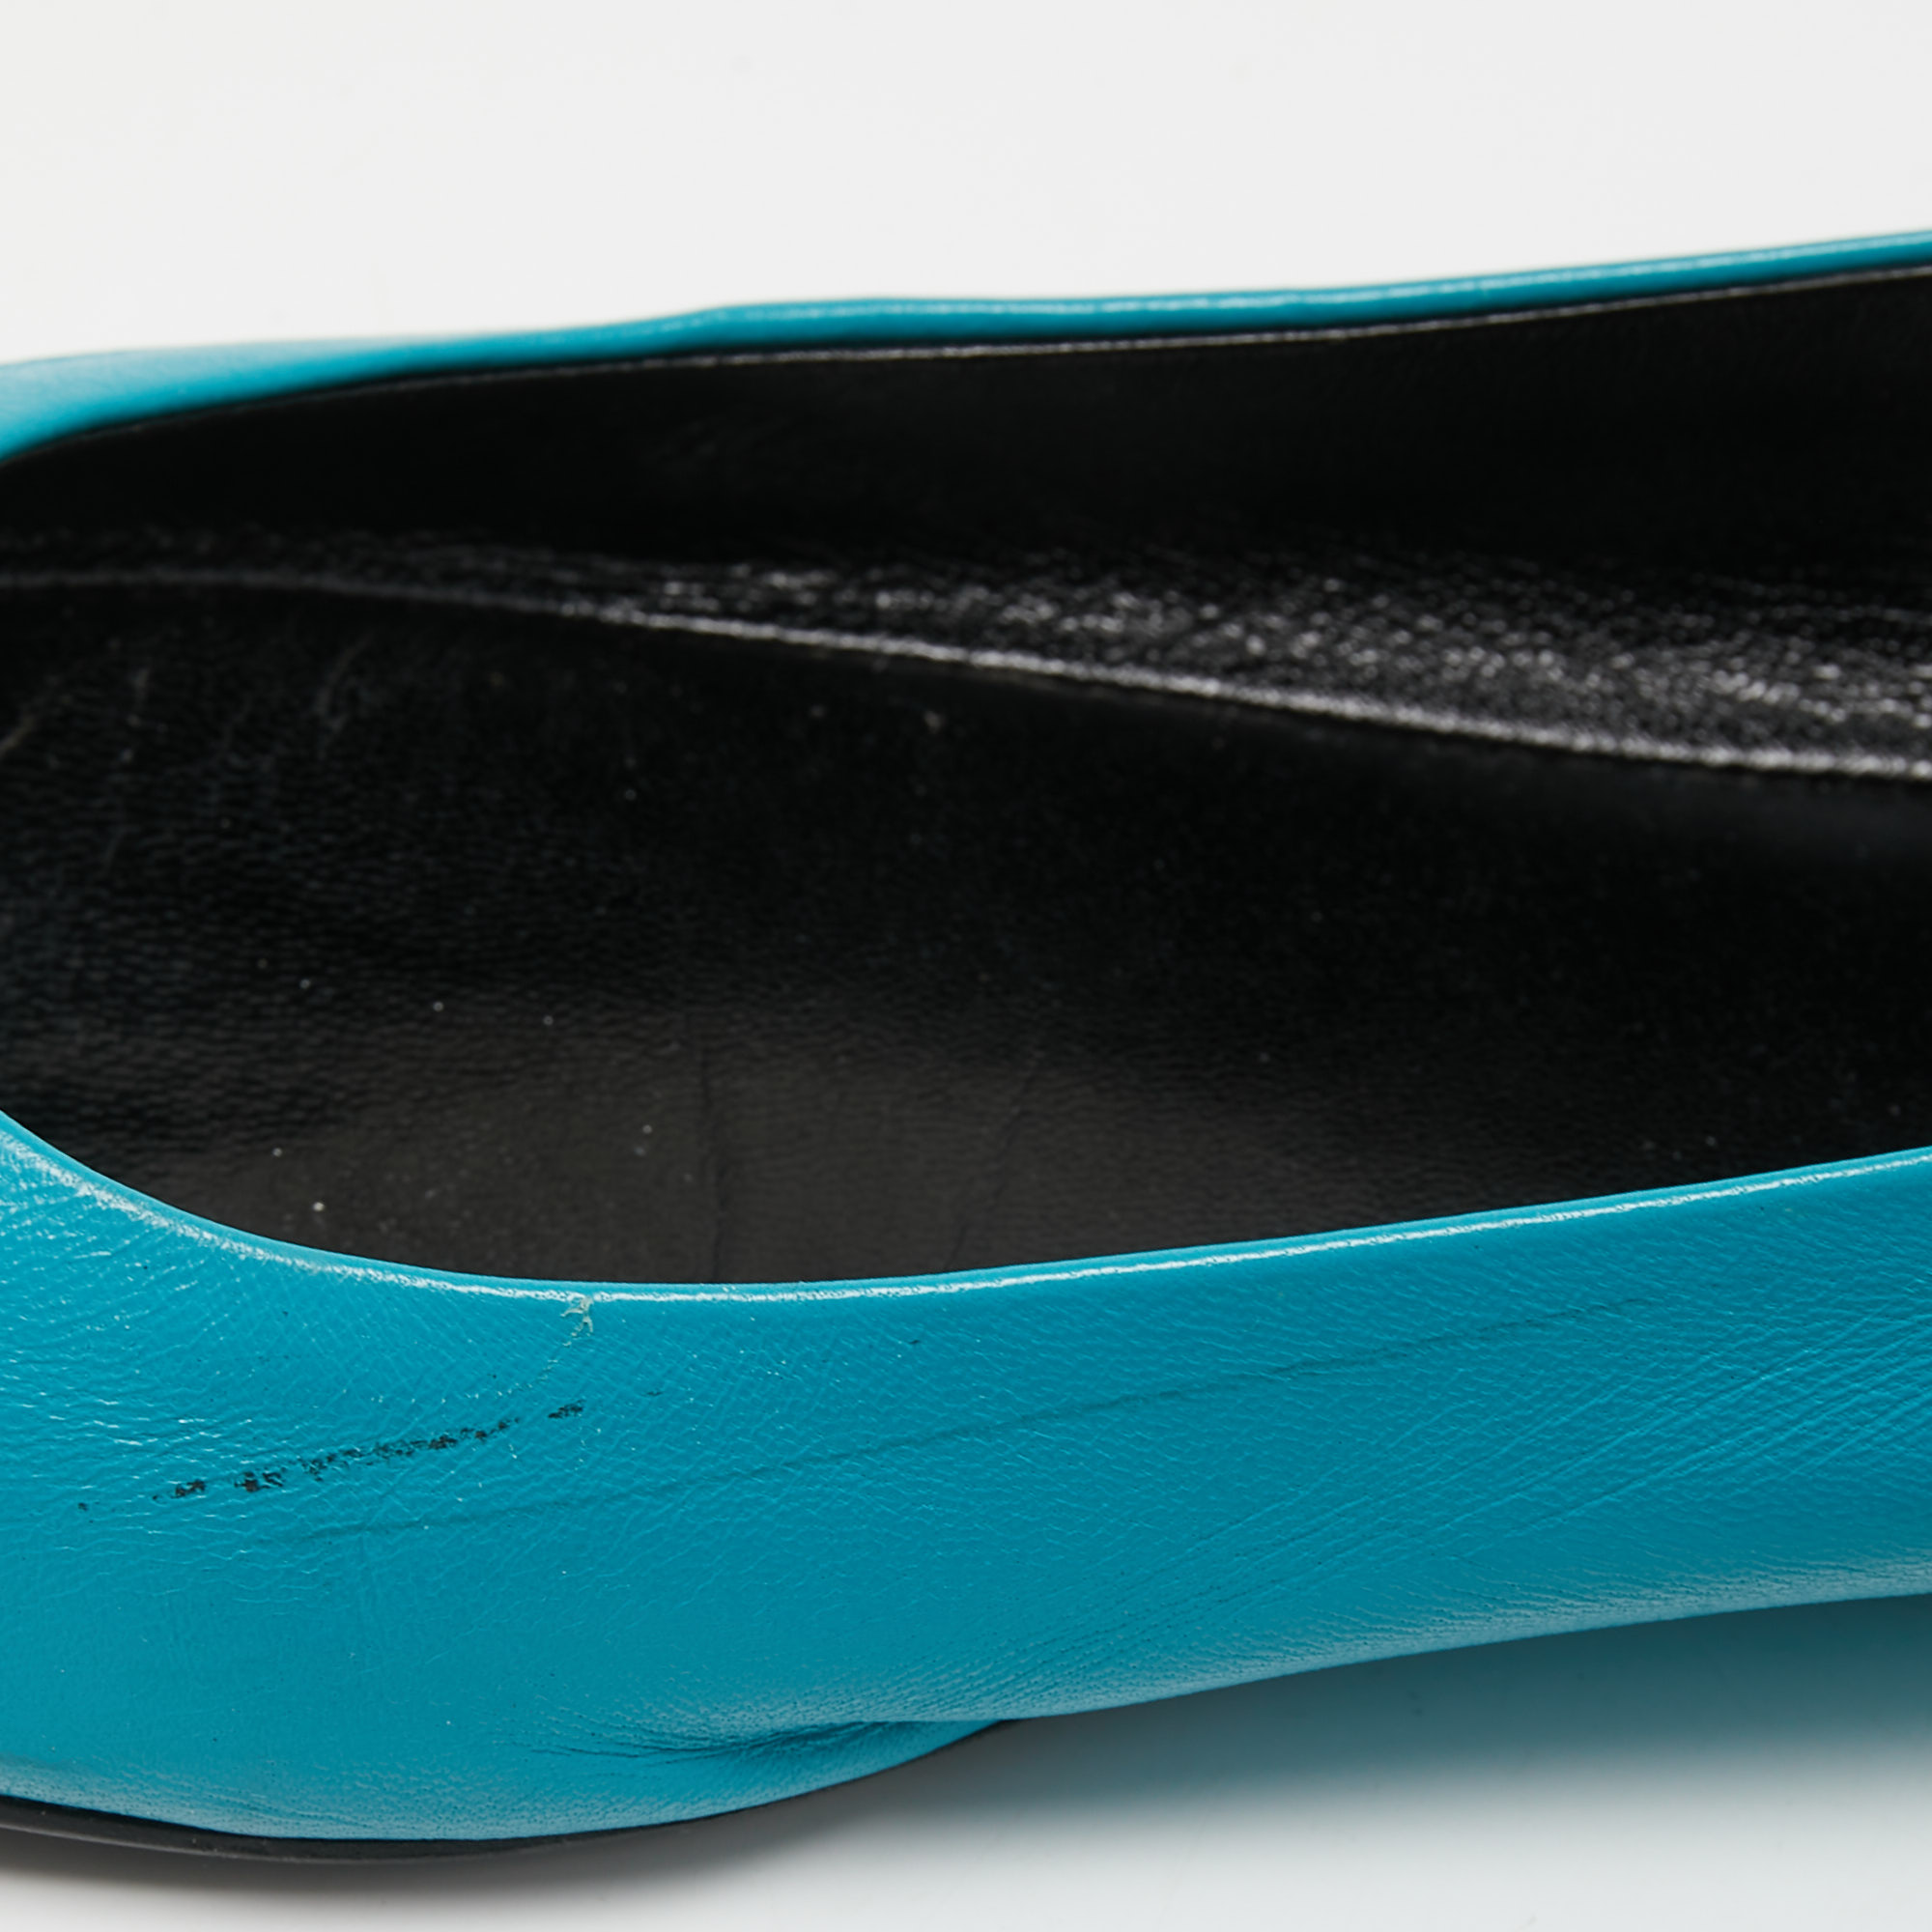 Balenciaga Blue Leather Studded Ballet Flats Size 40